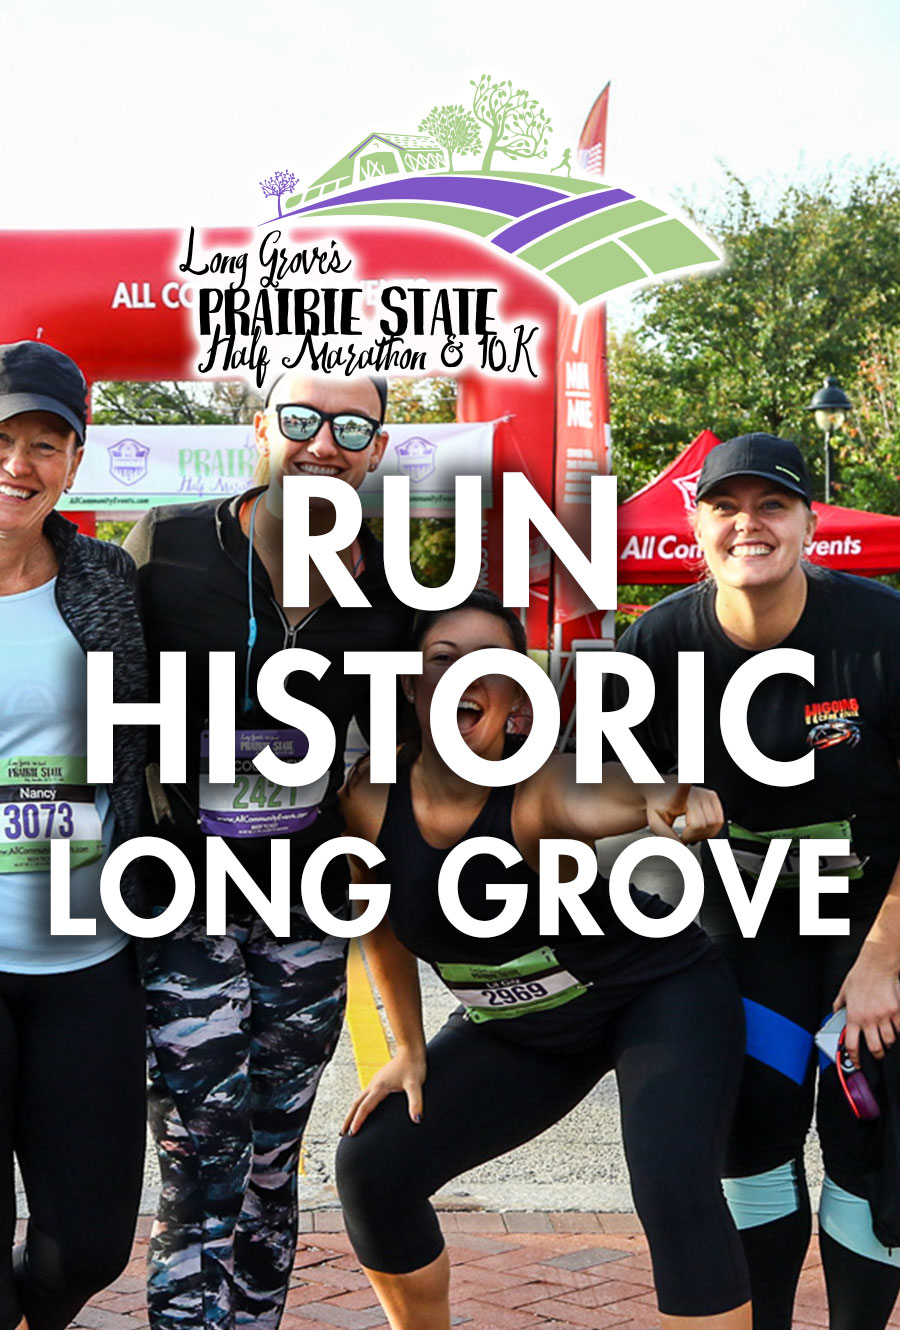 Prairie State Half Marathon & 10K of Long Grove